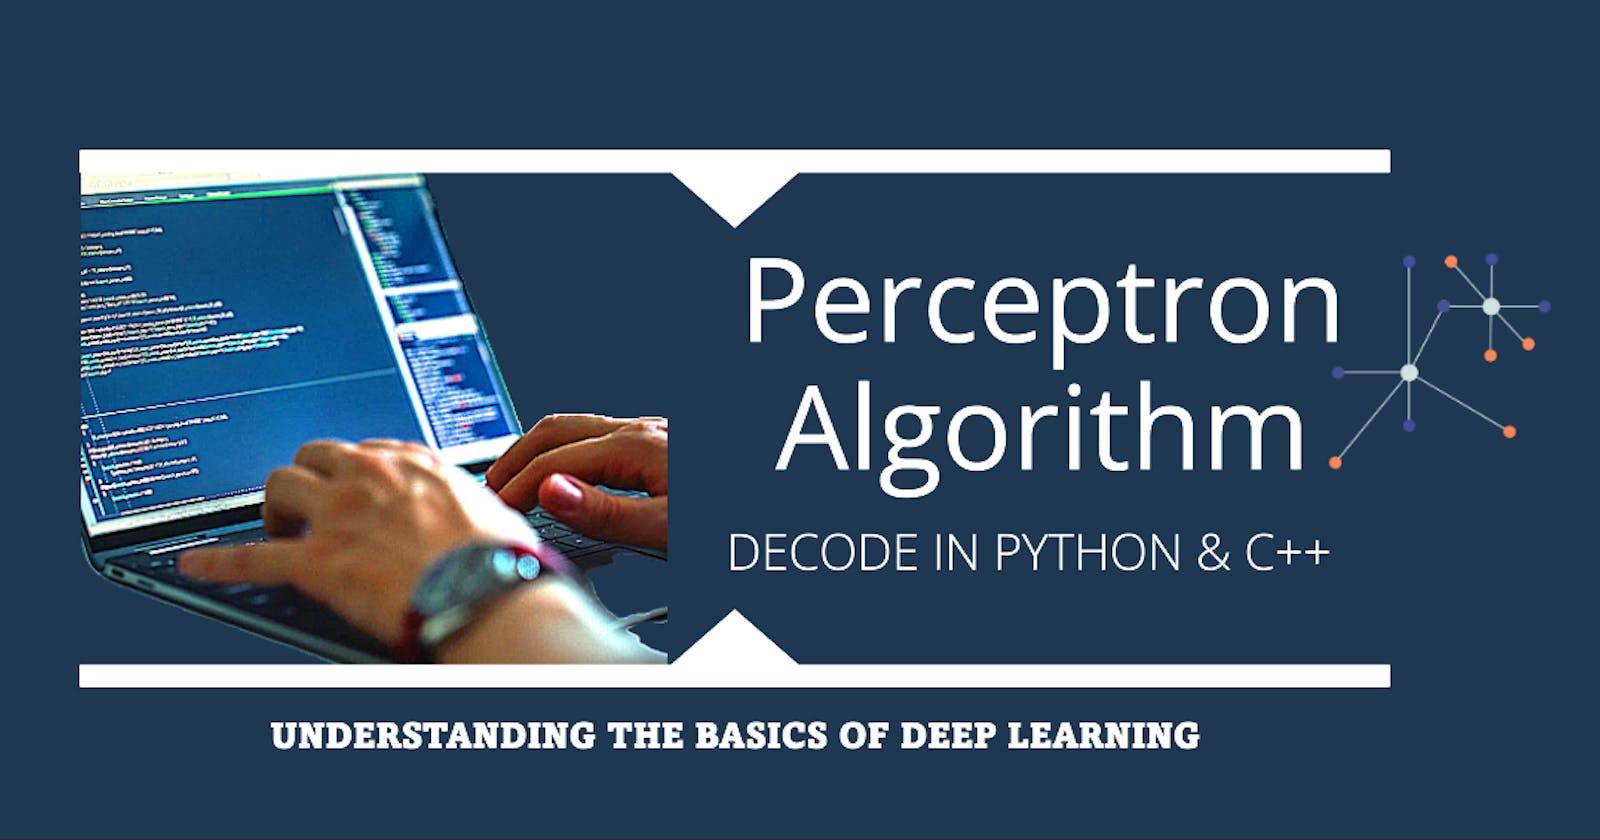 Perceptron Algorithm - How it Works?